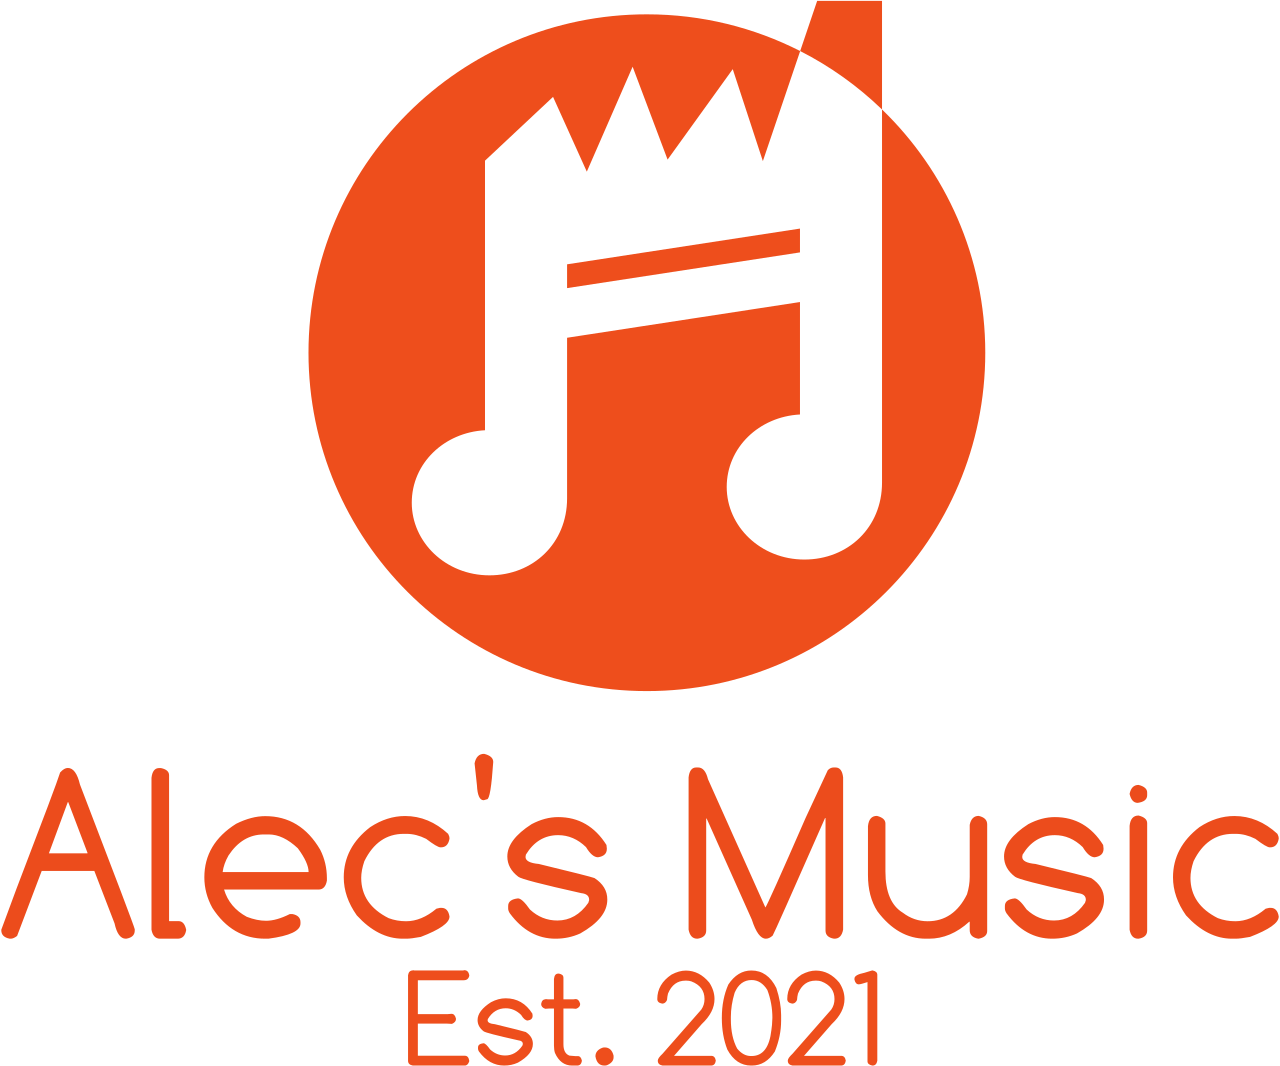 Alec's Music's logo